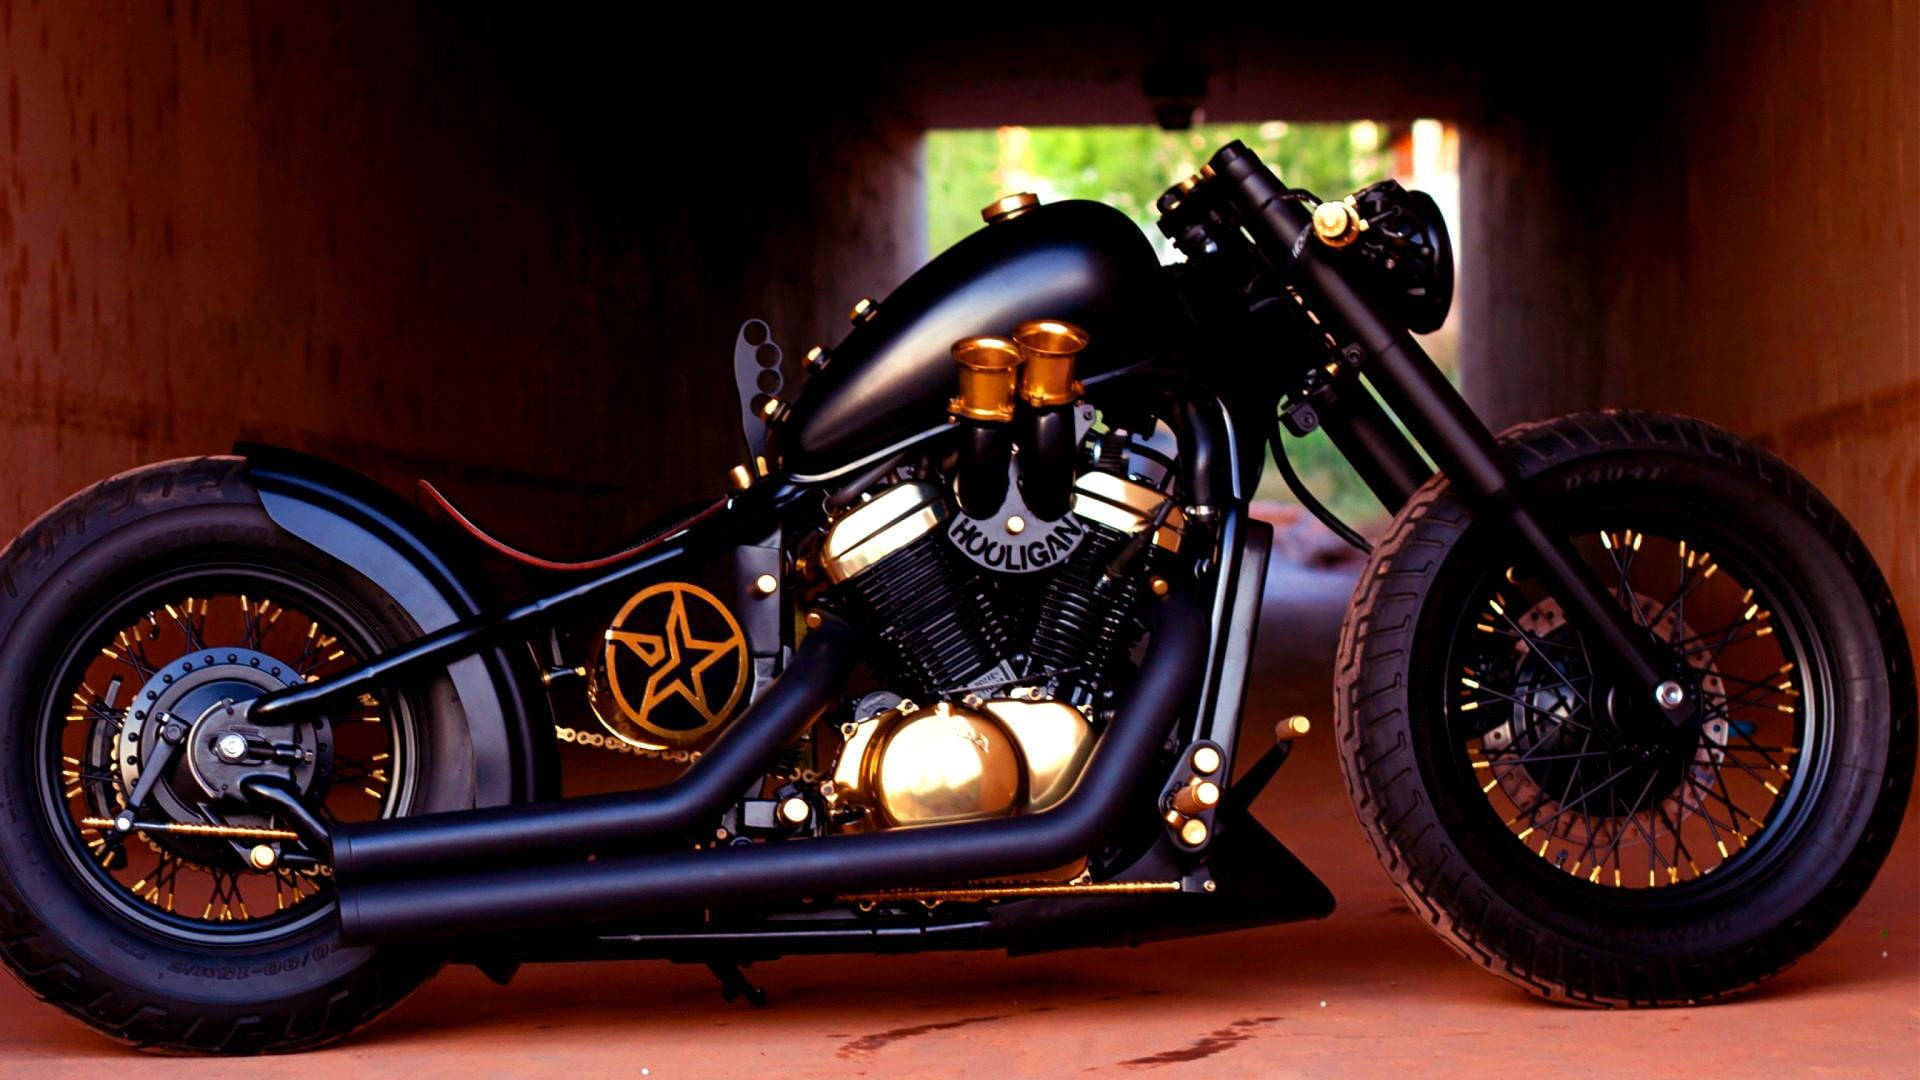 Honda Shadow Bobber Motorcycle Background